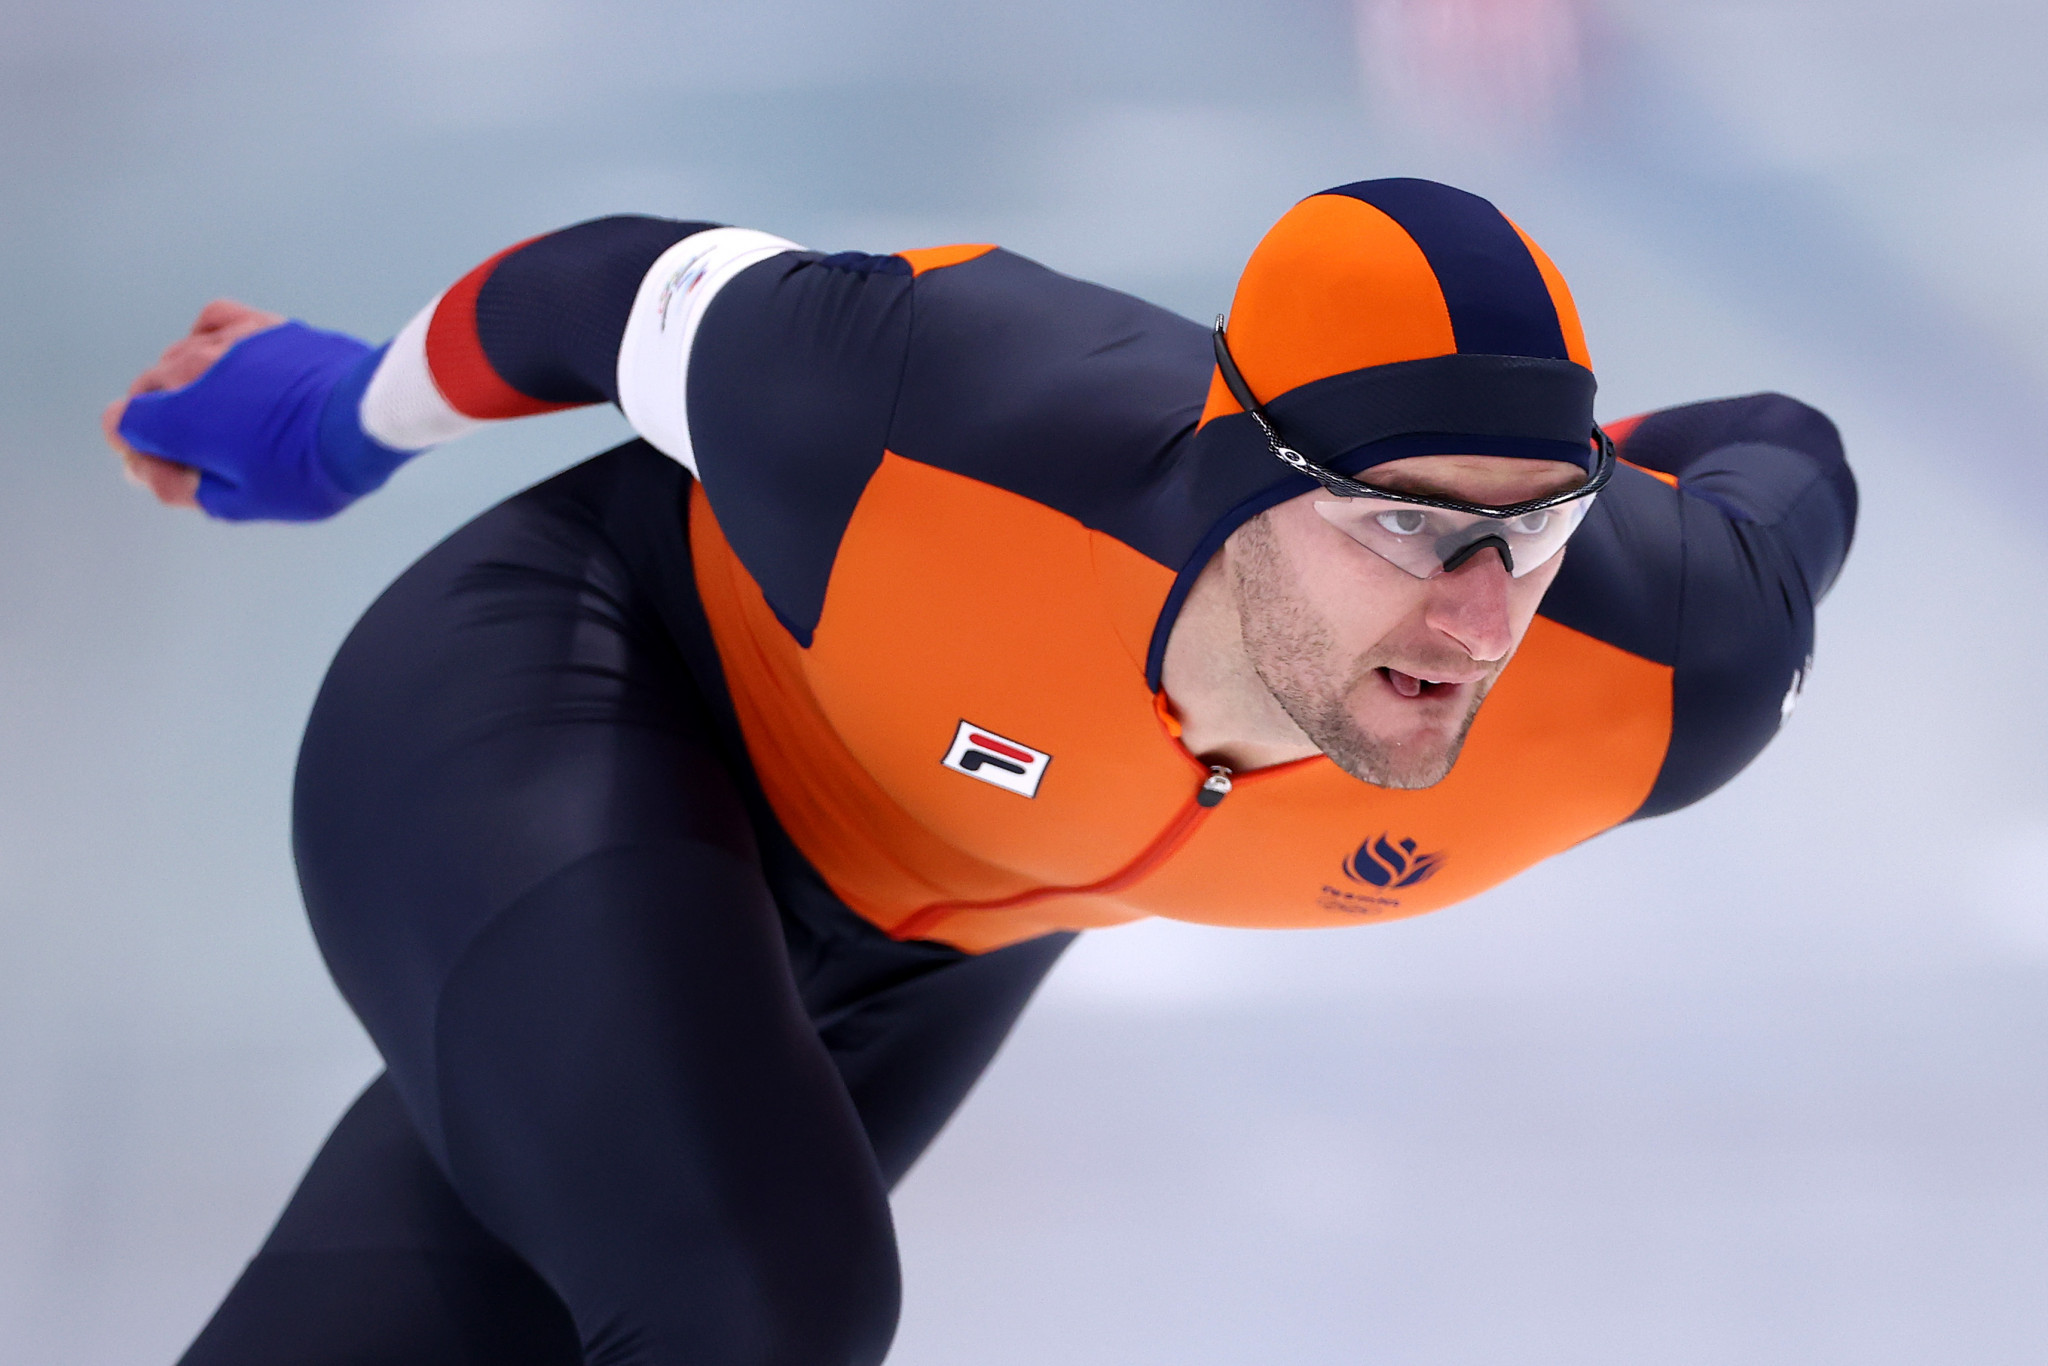 Krol secures second medal of Beijing 2022 with gold in men's 1000 metres speed skating